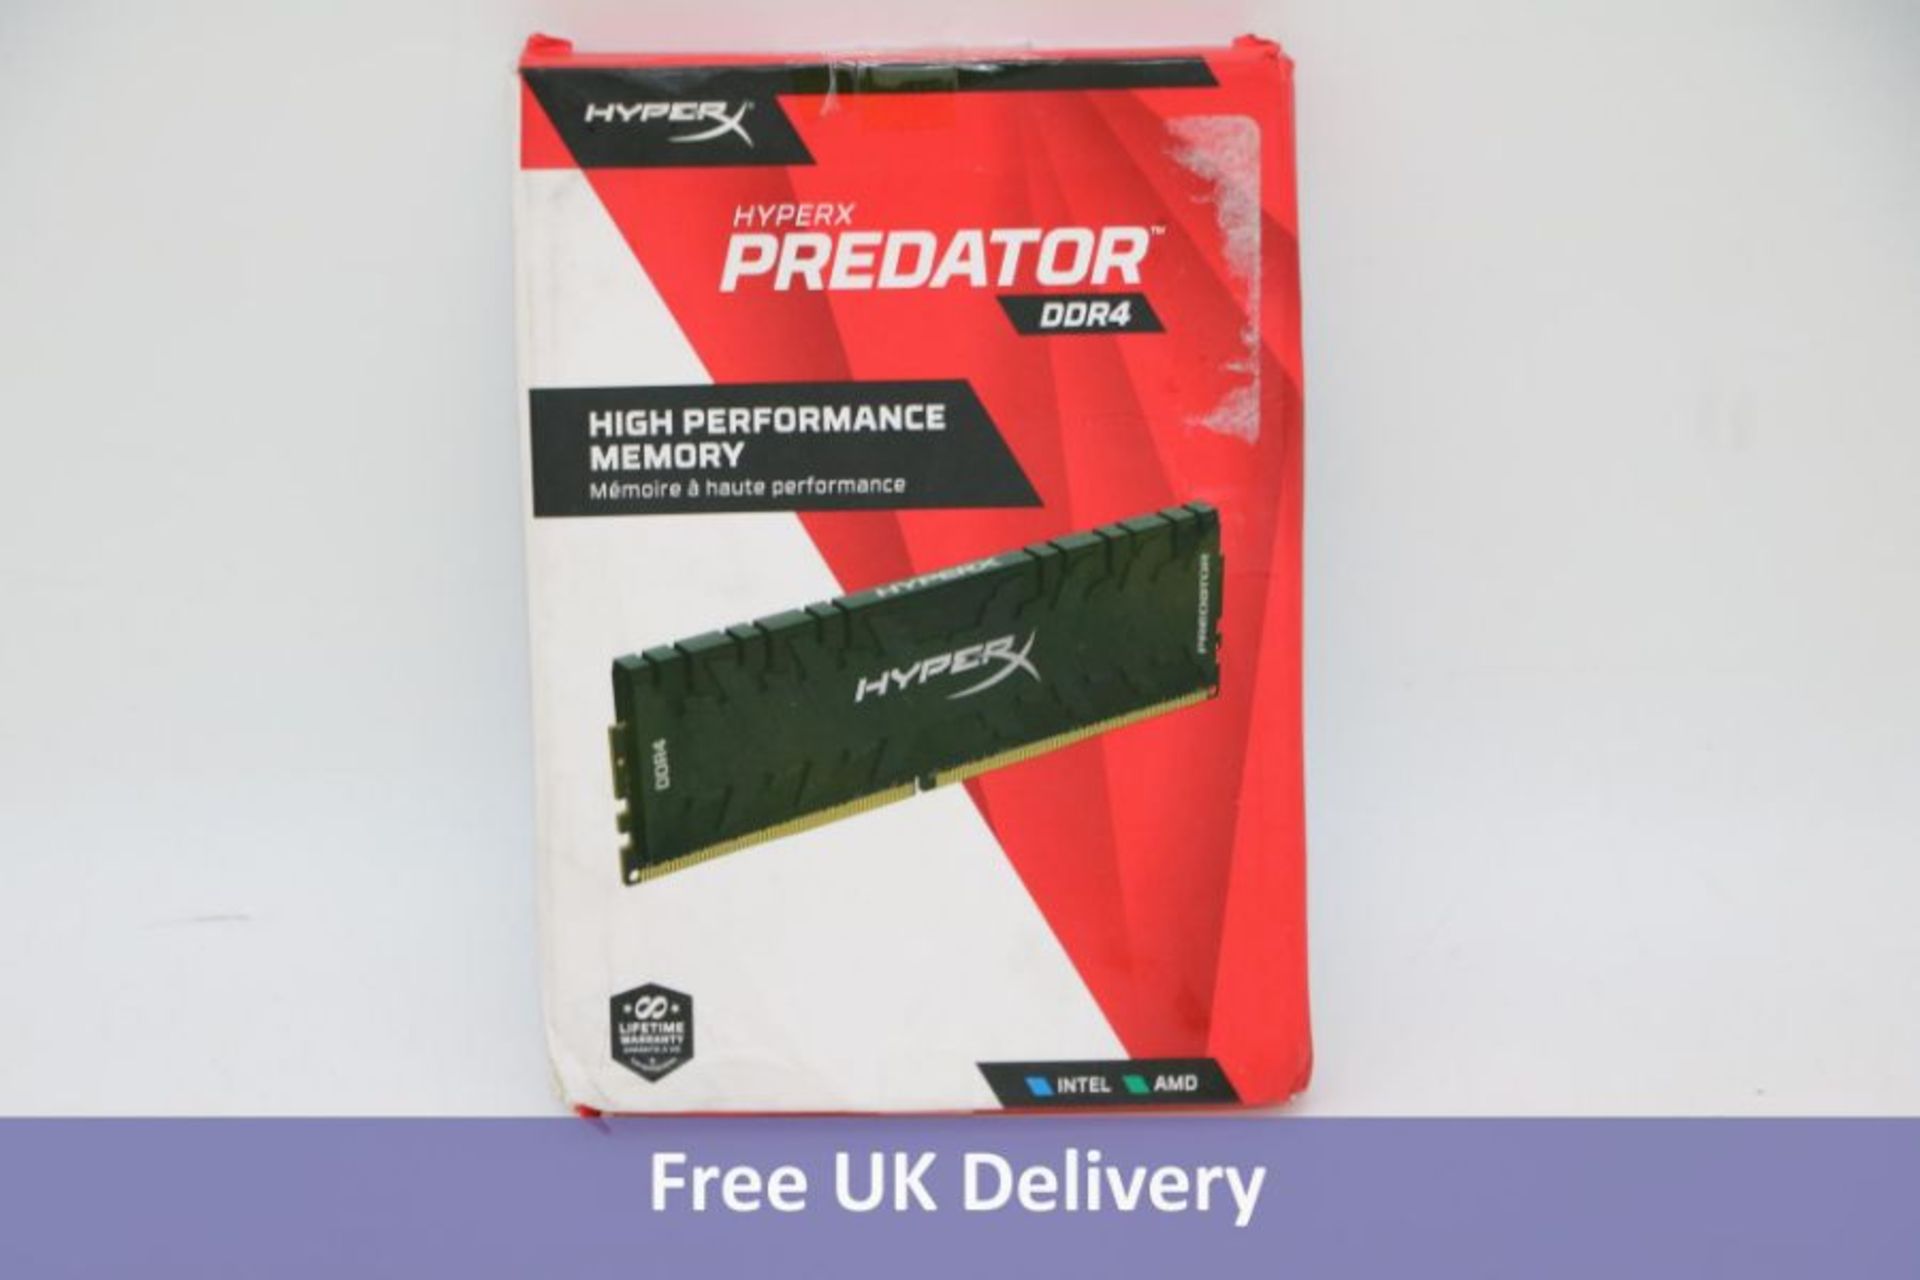 HyperX Predator DDR4, High Performance Memory, HX432C16PB3K2/64, Box damaged, not tested